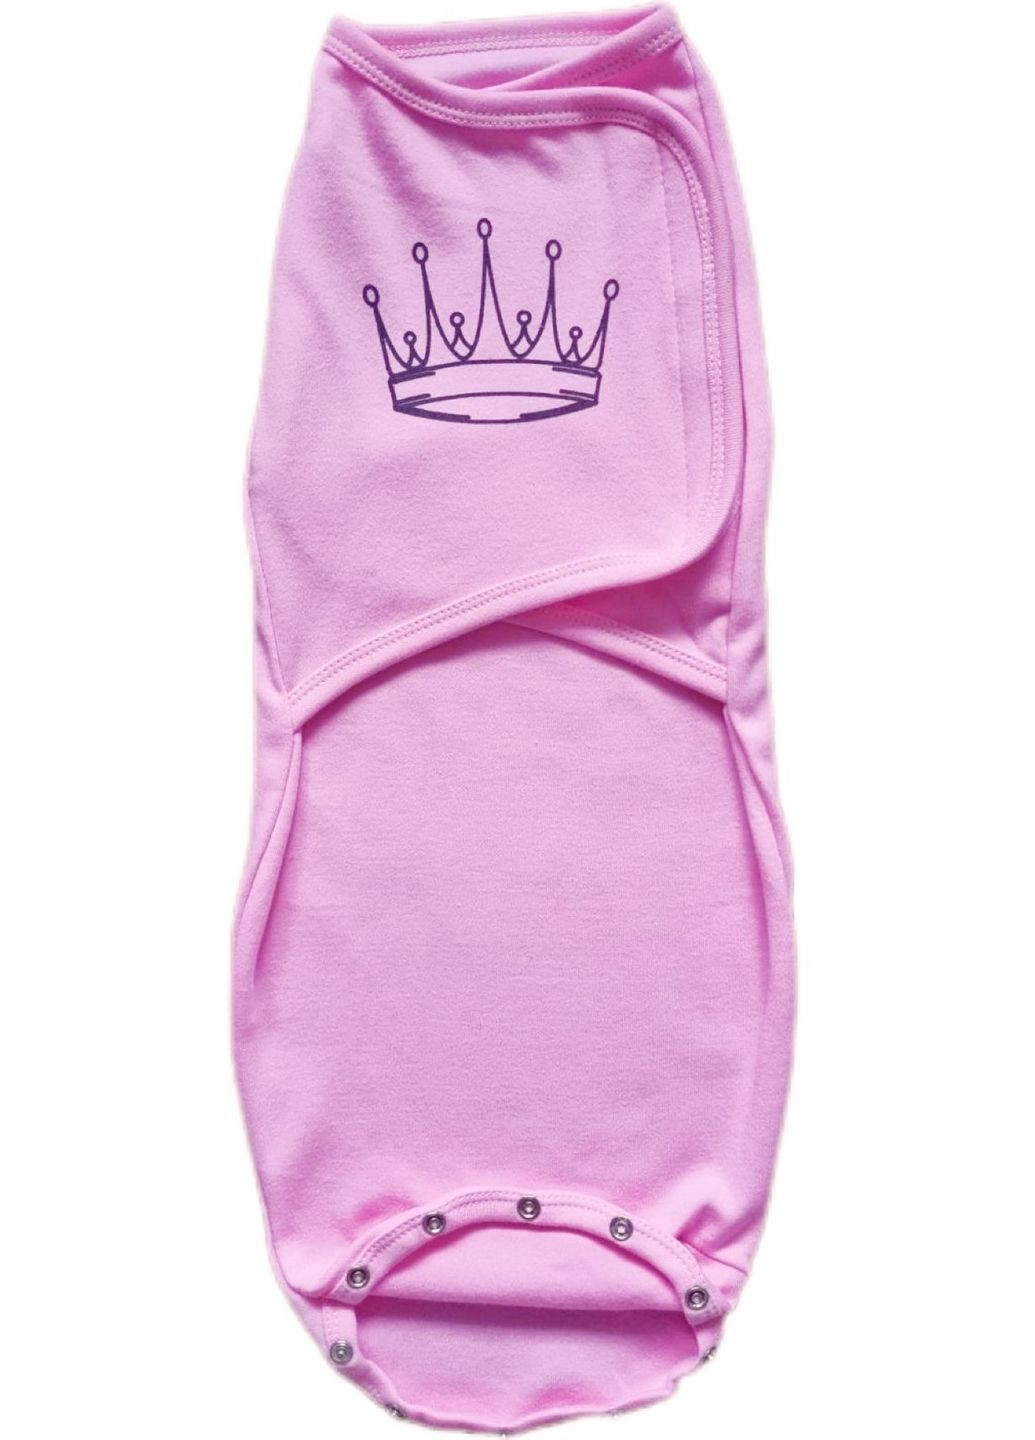 Евро пеленка кокон на липучках Короны розовые (байка) №1 () Mommy Bag (280941877)